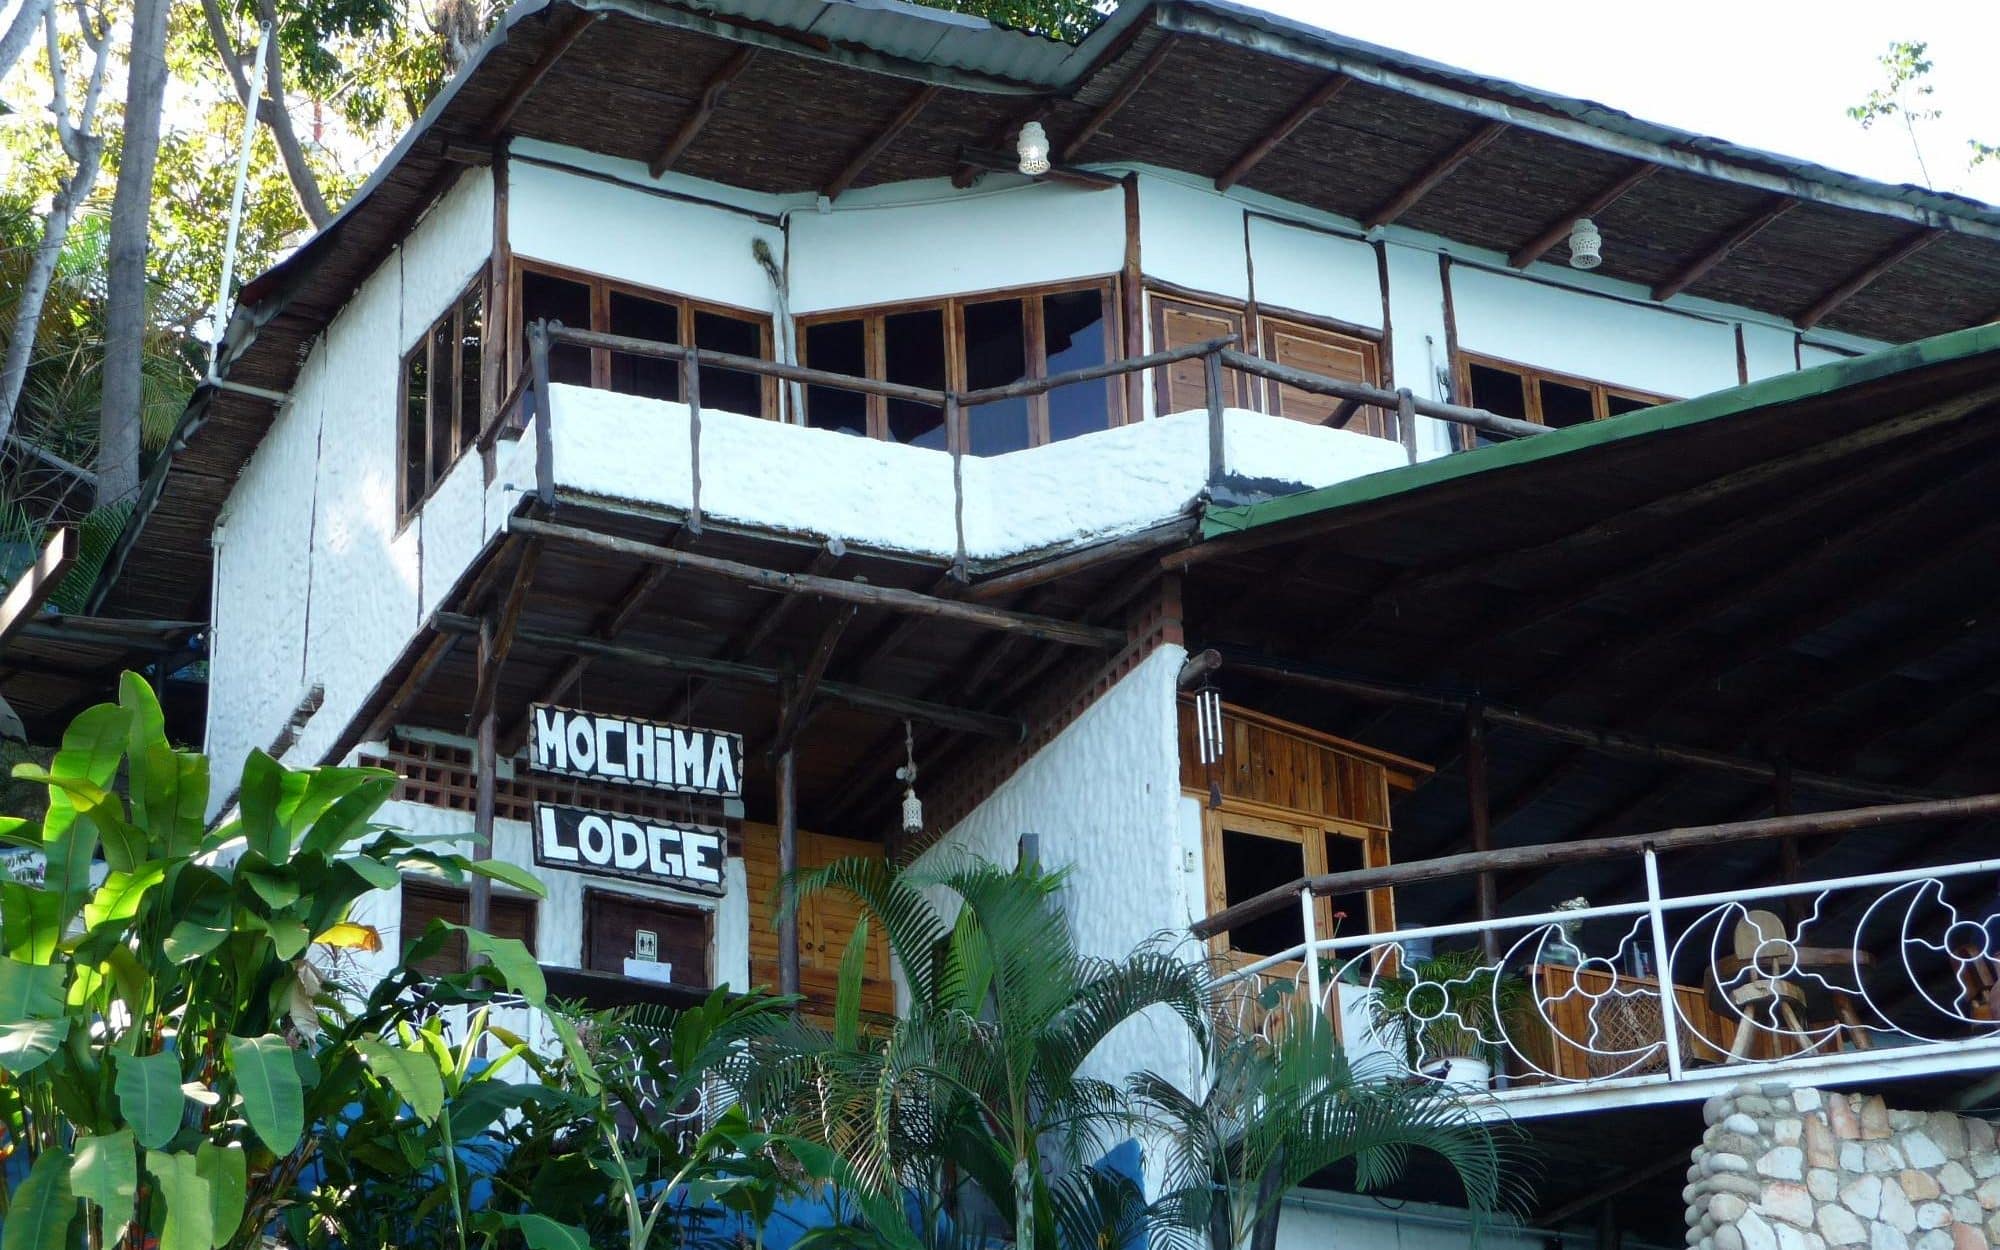 Mochima Lodge